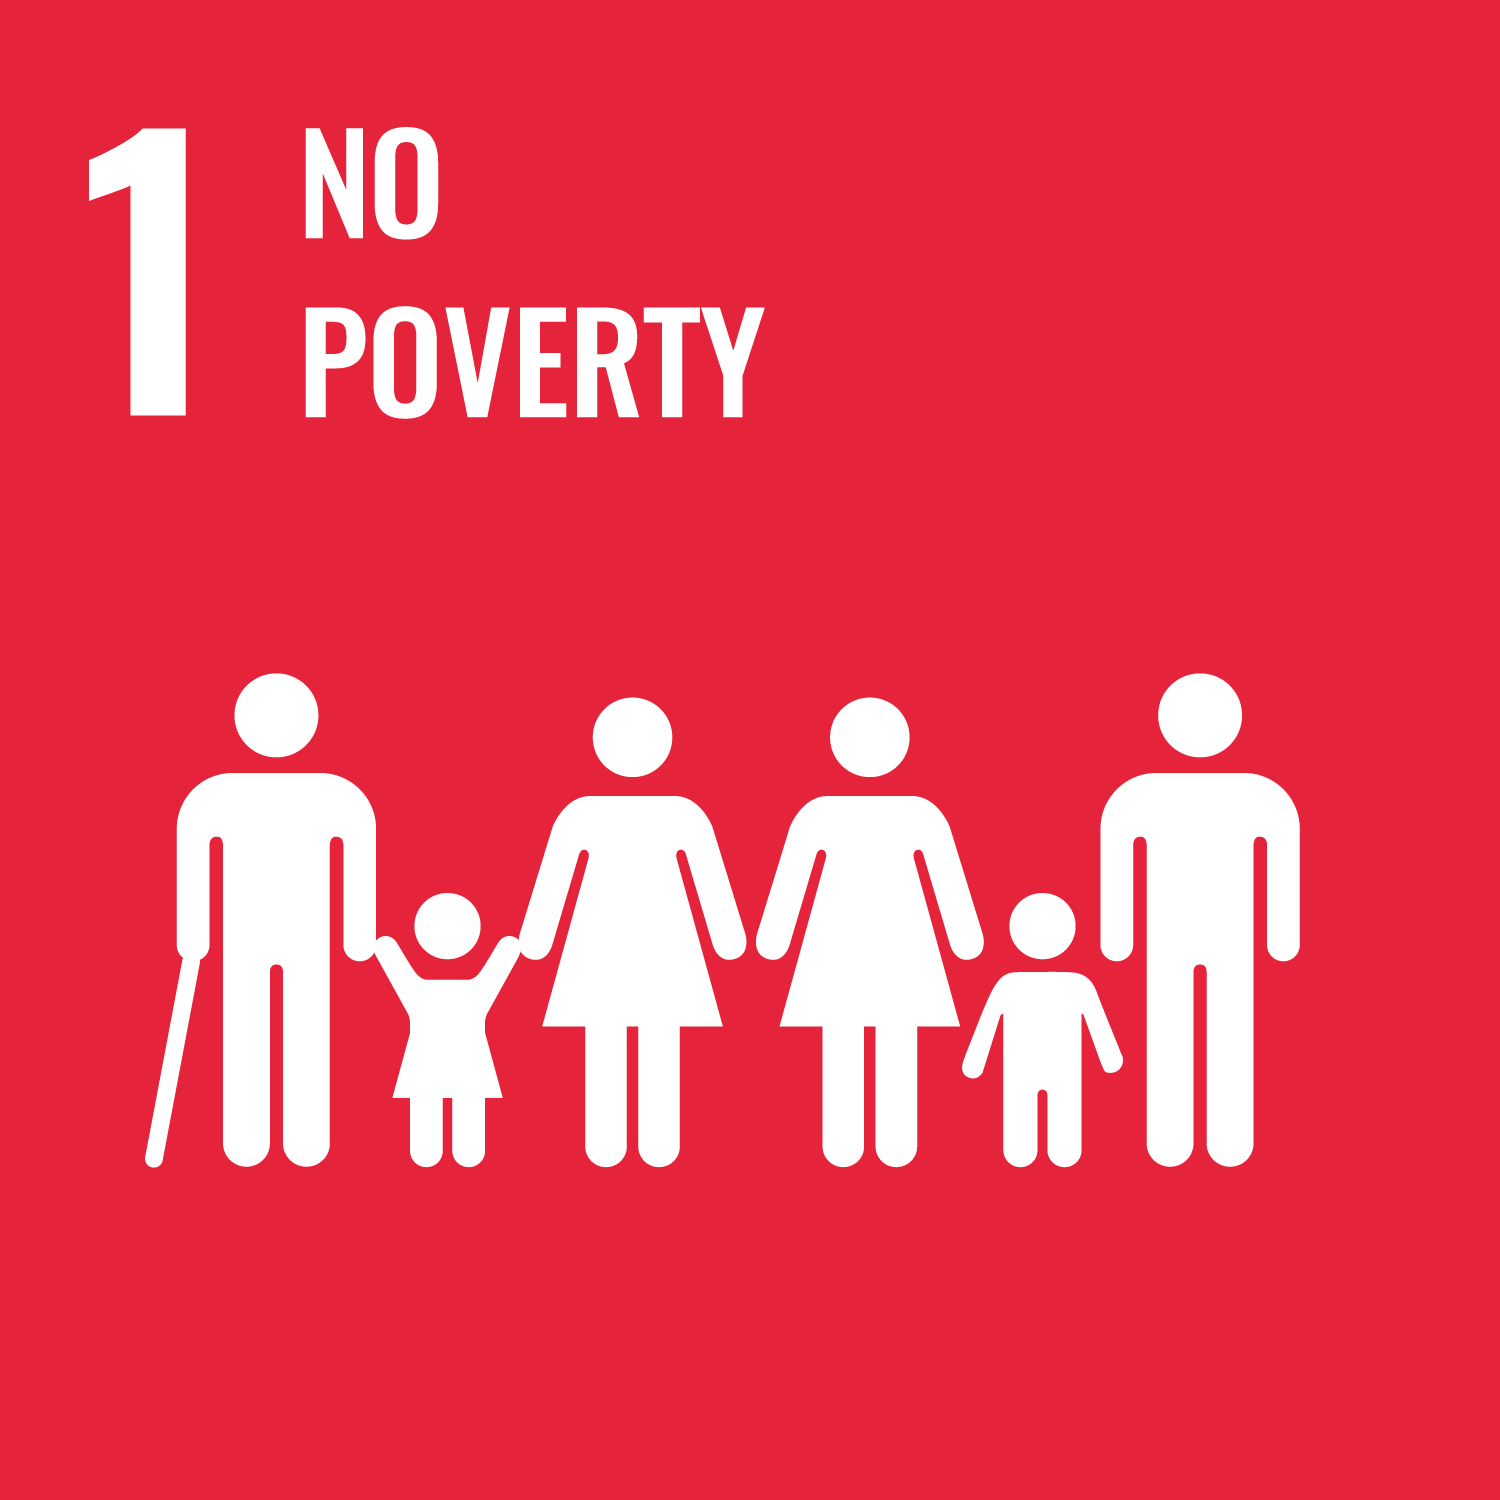 UN Sustainable Development Goal 1 - No Poverty 